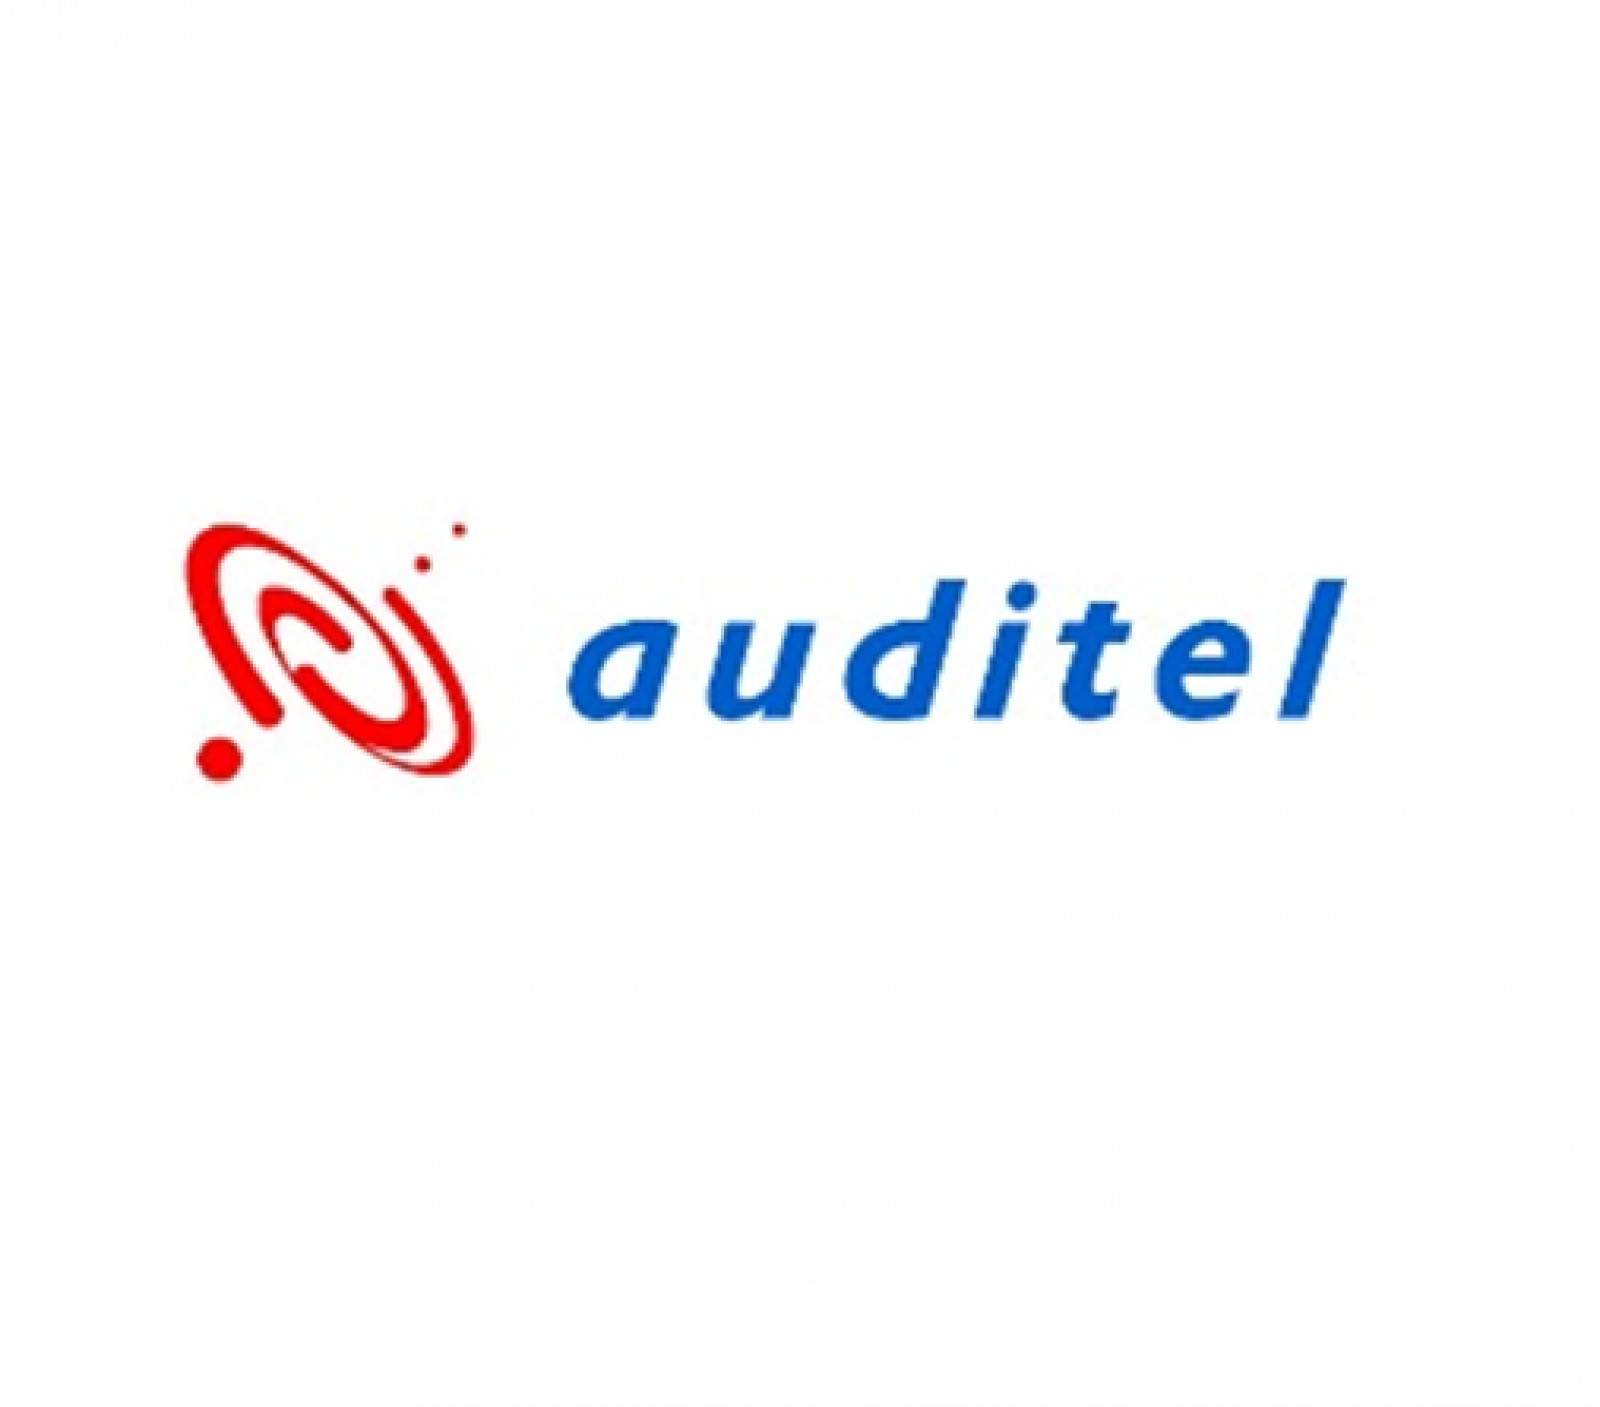 Our carbon neutral journey with Auditel